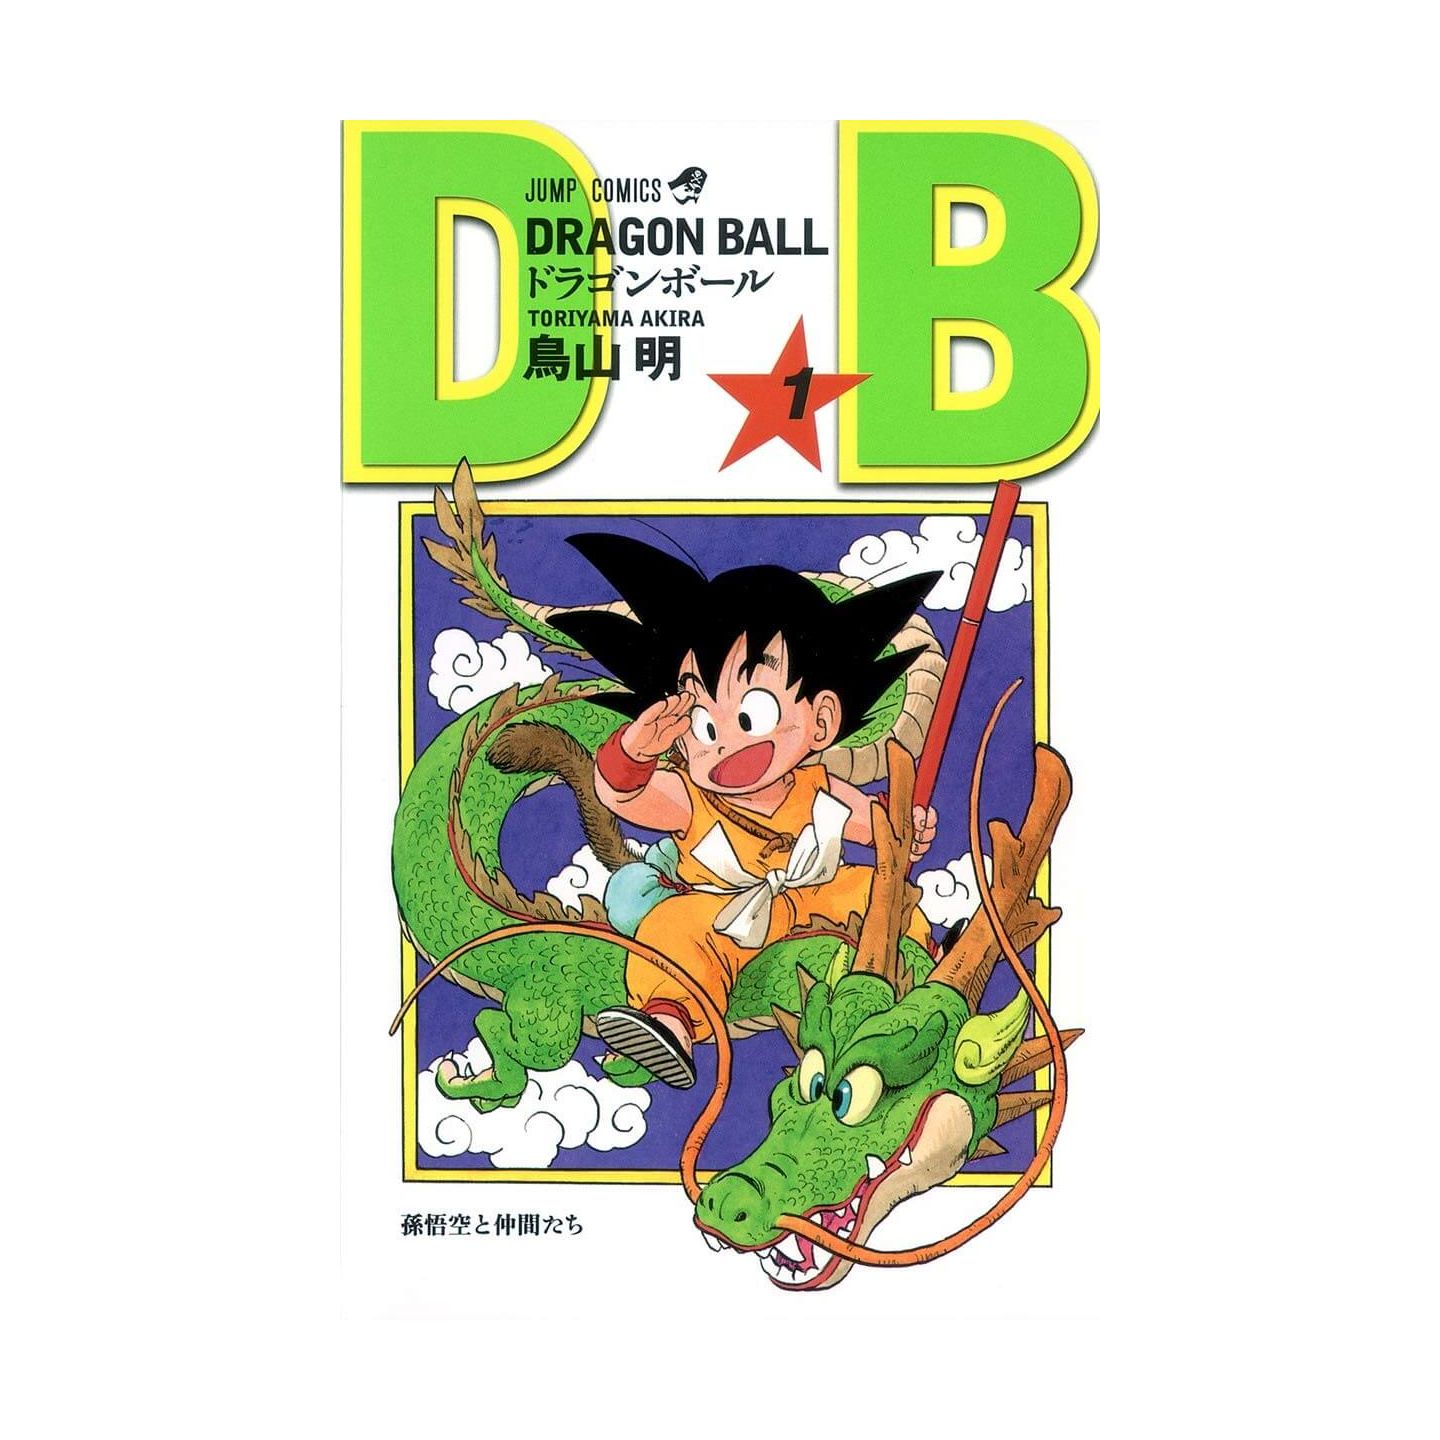 Dragon Ball vol.01 Jump Comics (japanese version)